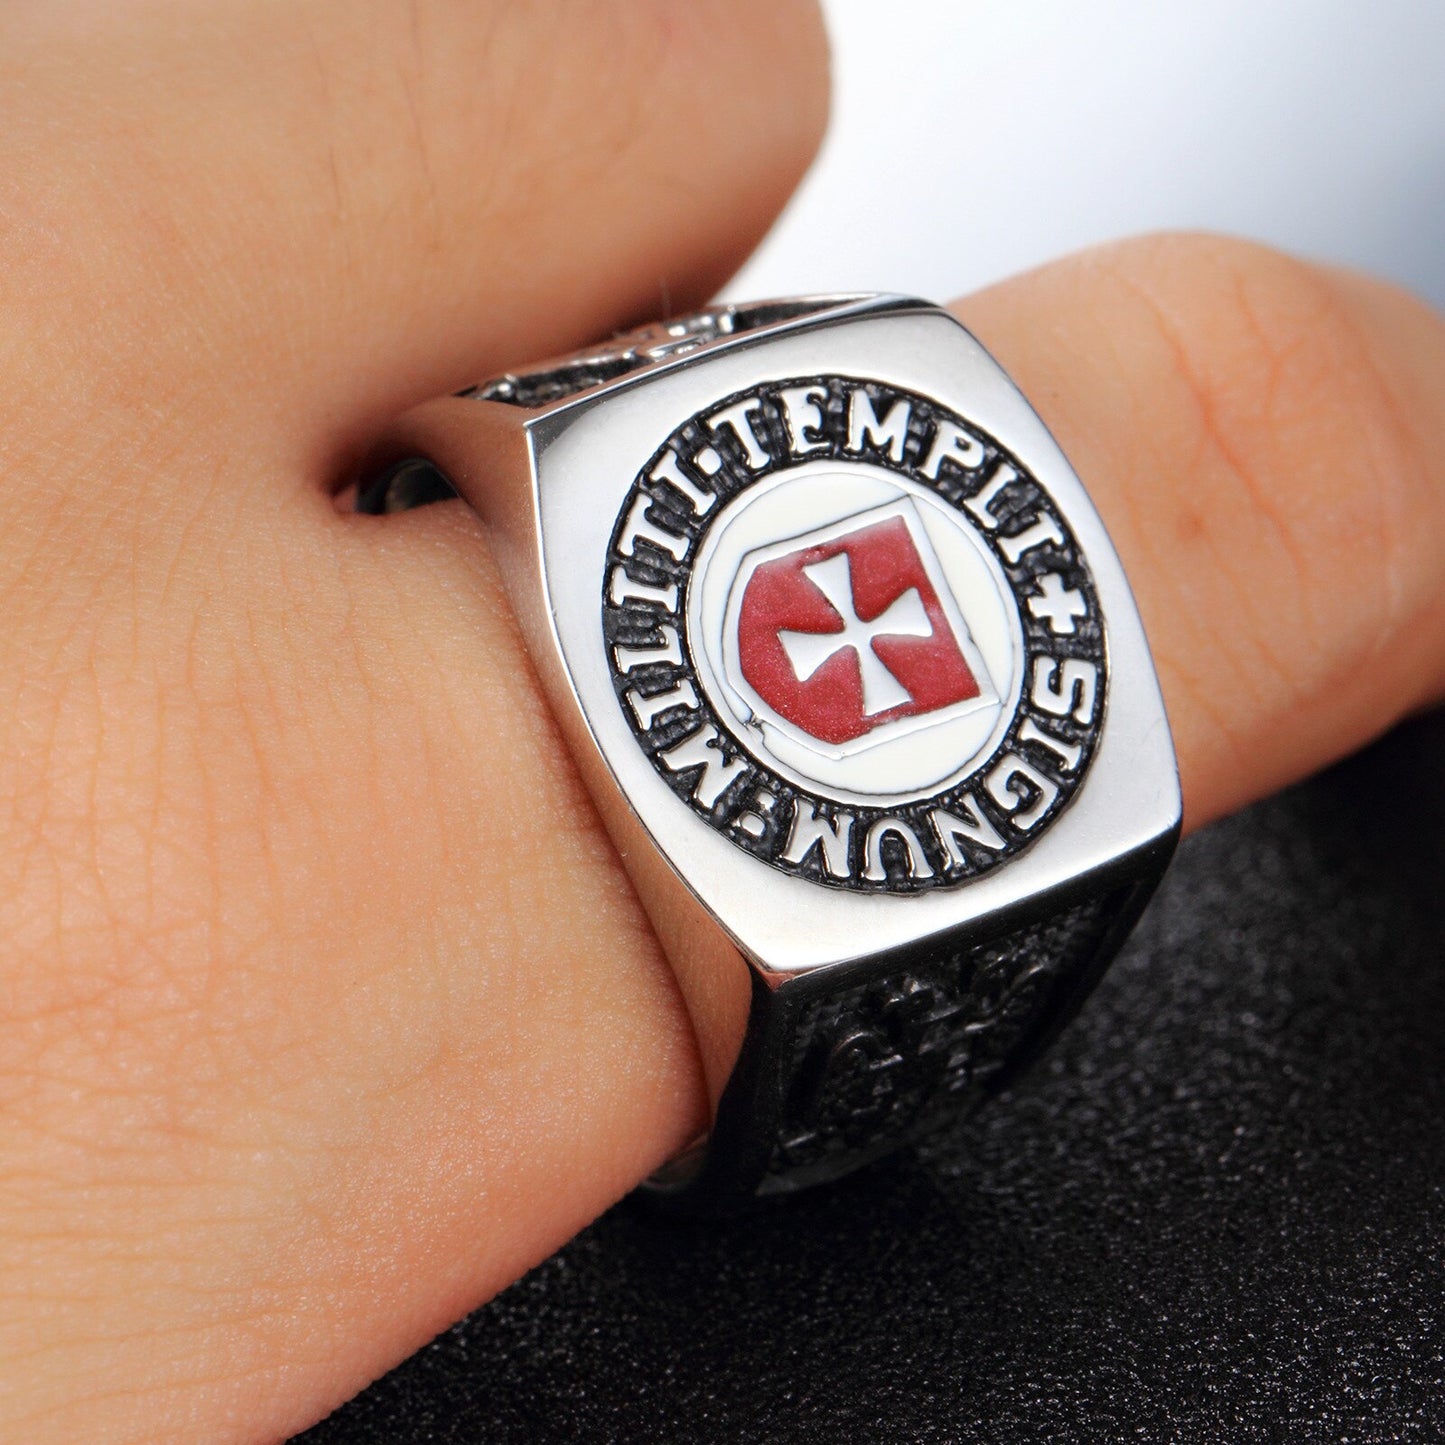 Knights Templar Stainless Steel Masonic Ring